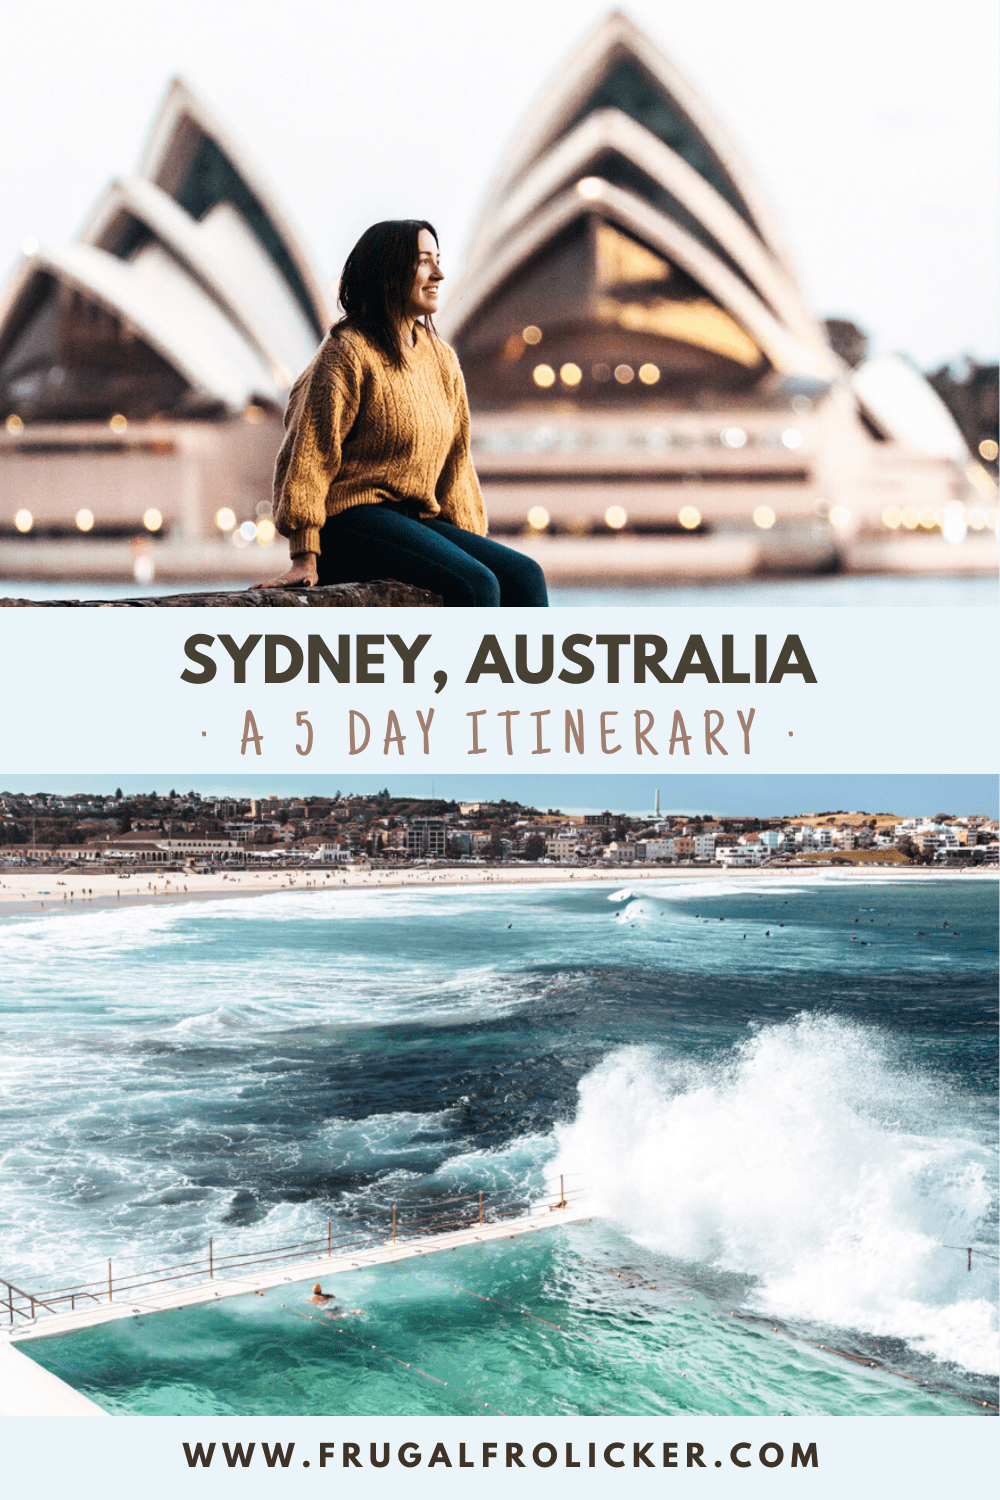 5 Days in Sydney - A Sydney Itinerary for 5 Days